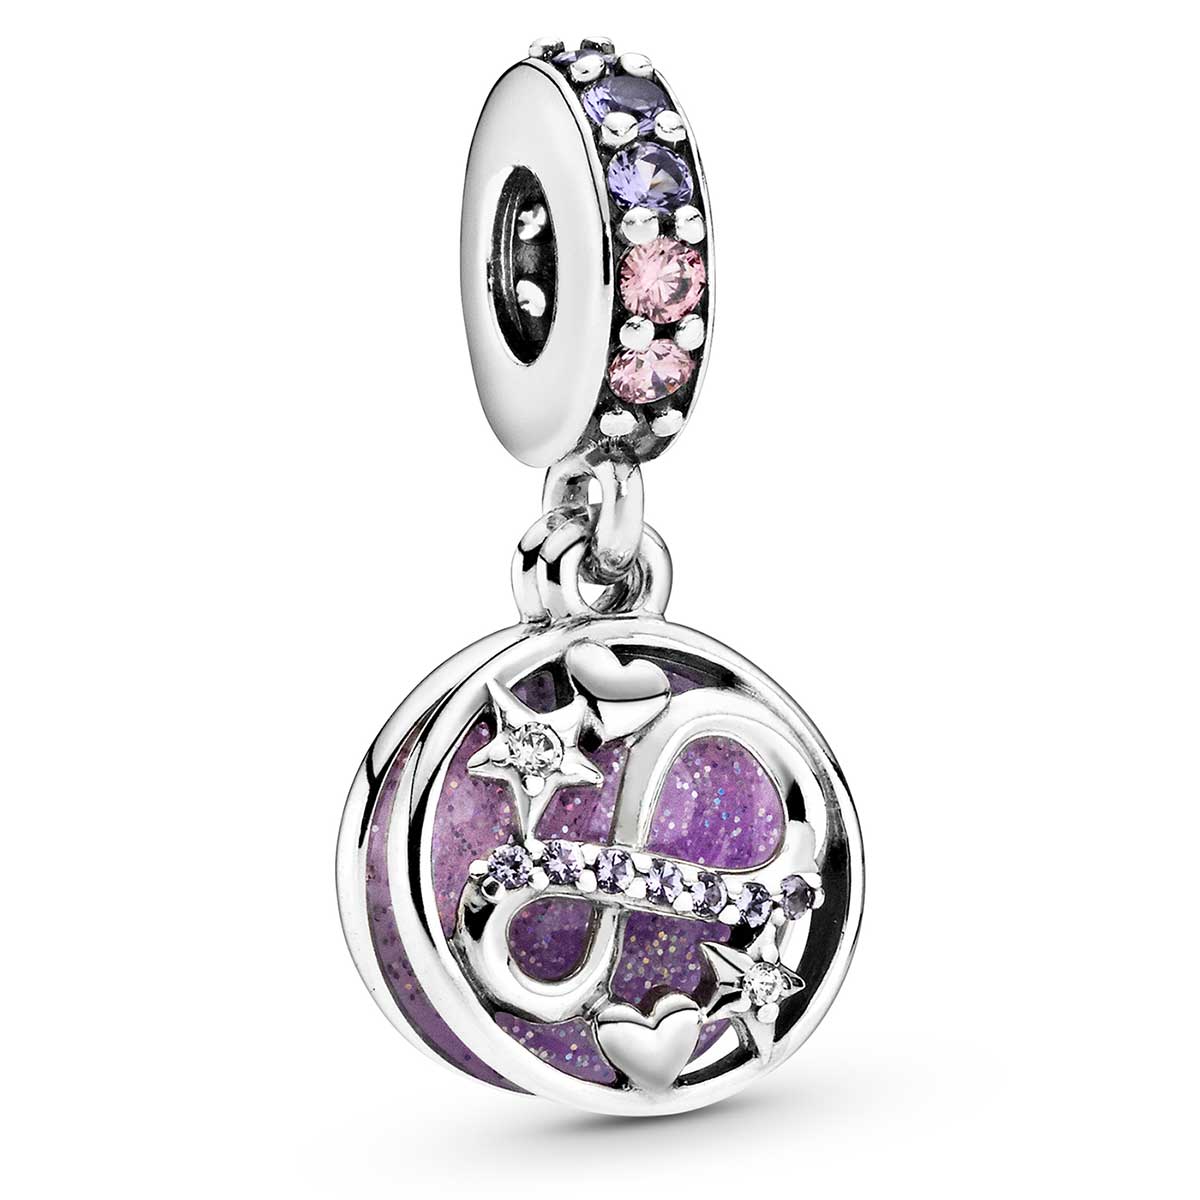 Glittering Infinity Hearts /& Stars Dangle Charm  Fits Pandora Bracelet  ALE  S925 Sterling Silver  Fully Stamped